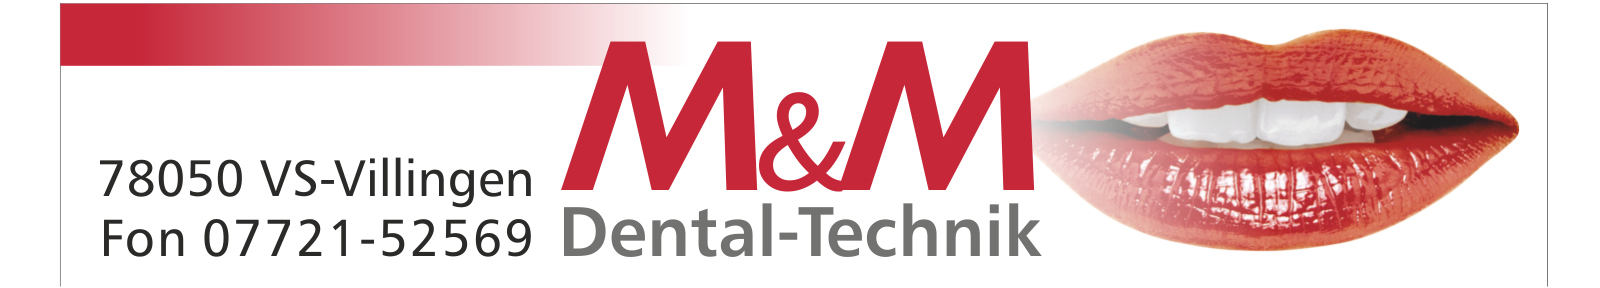 M%M Dental-Technik Villingen-Schwenningen